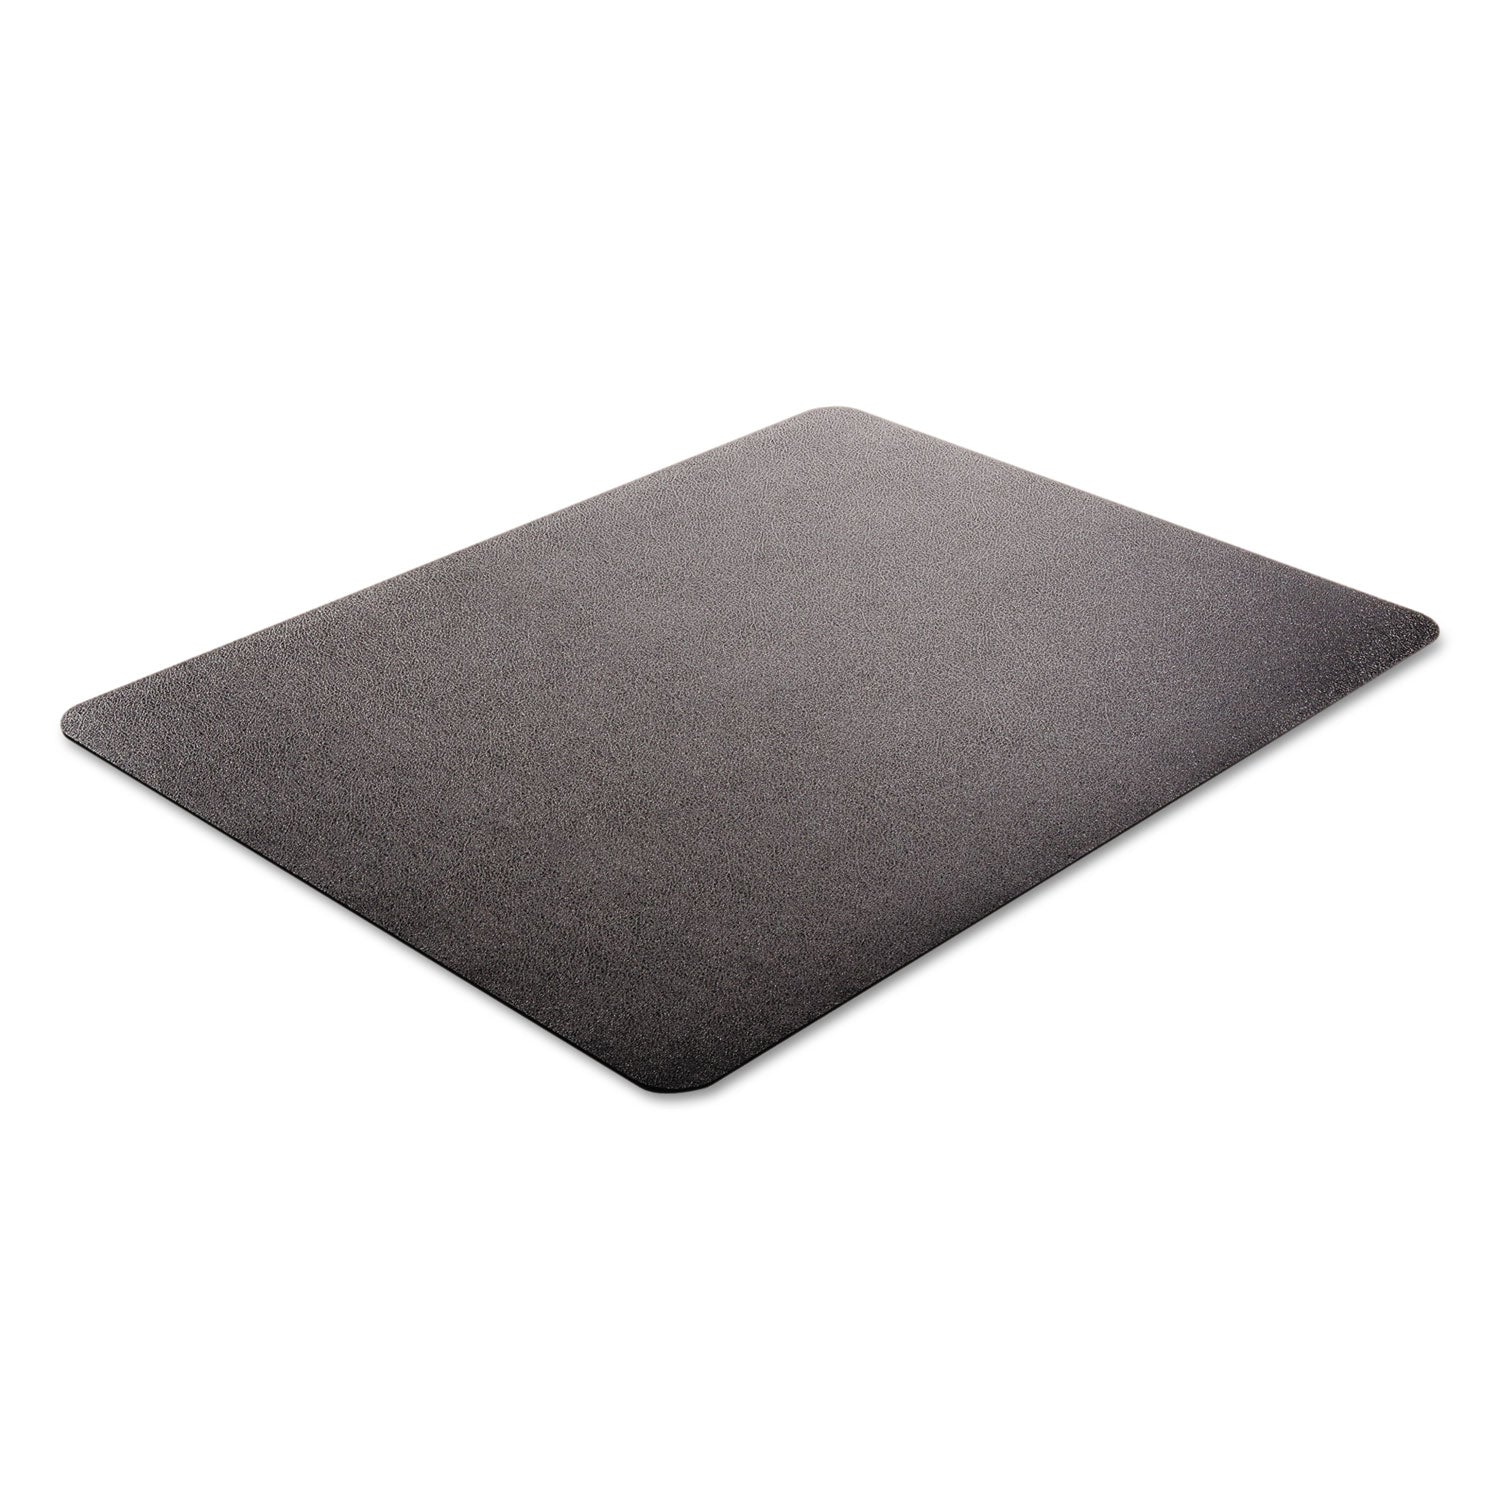 EconoMat Occasional Use Chair Mat for Low Pile Carpet, 46 x 60, Rectangular, Black - 